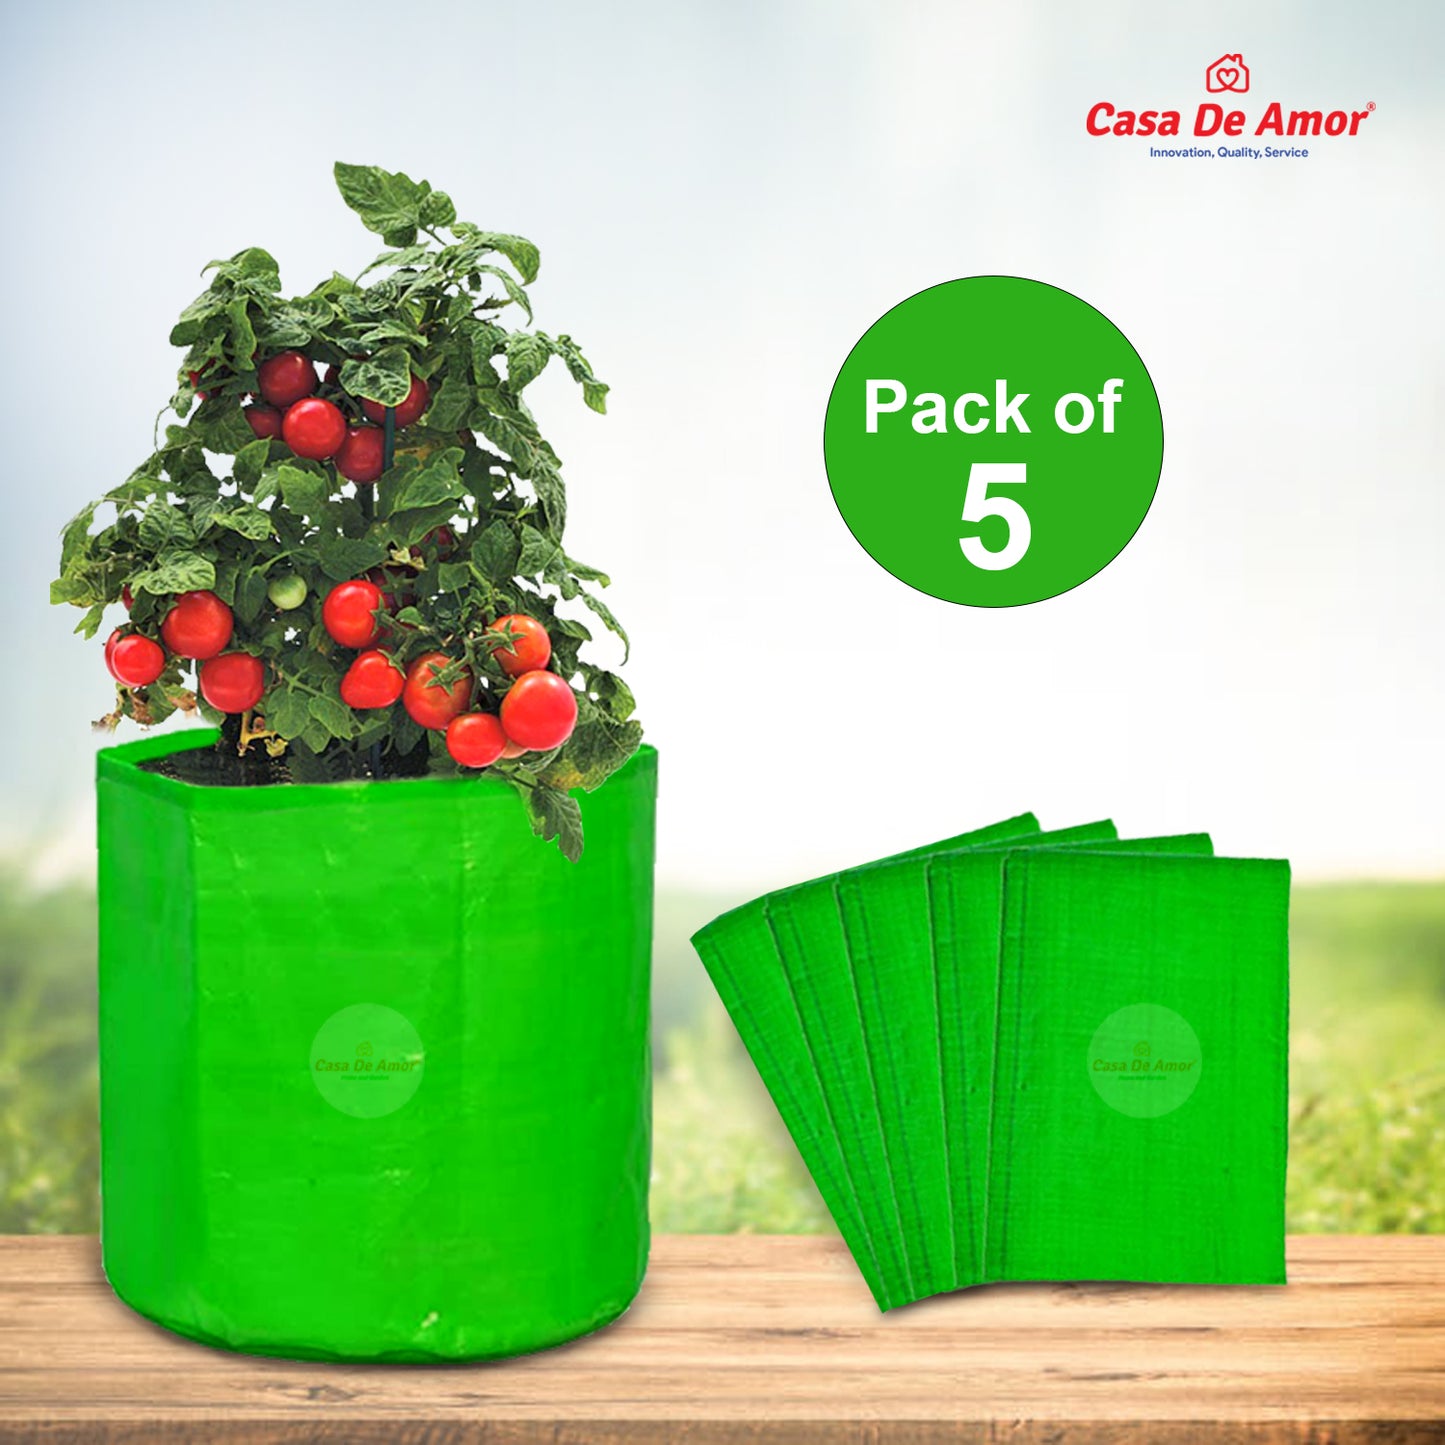 Casa De Amor Terrace Gardening Vegetable and Flower Green Grow Bag (12" X 12" inches, 220 GSM)